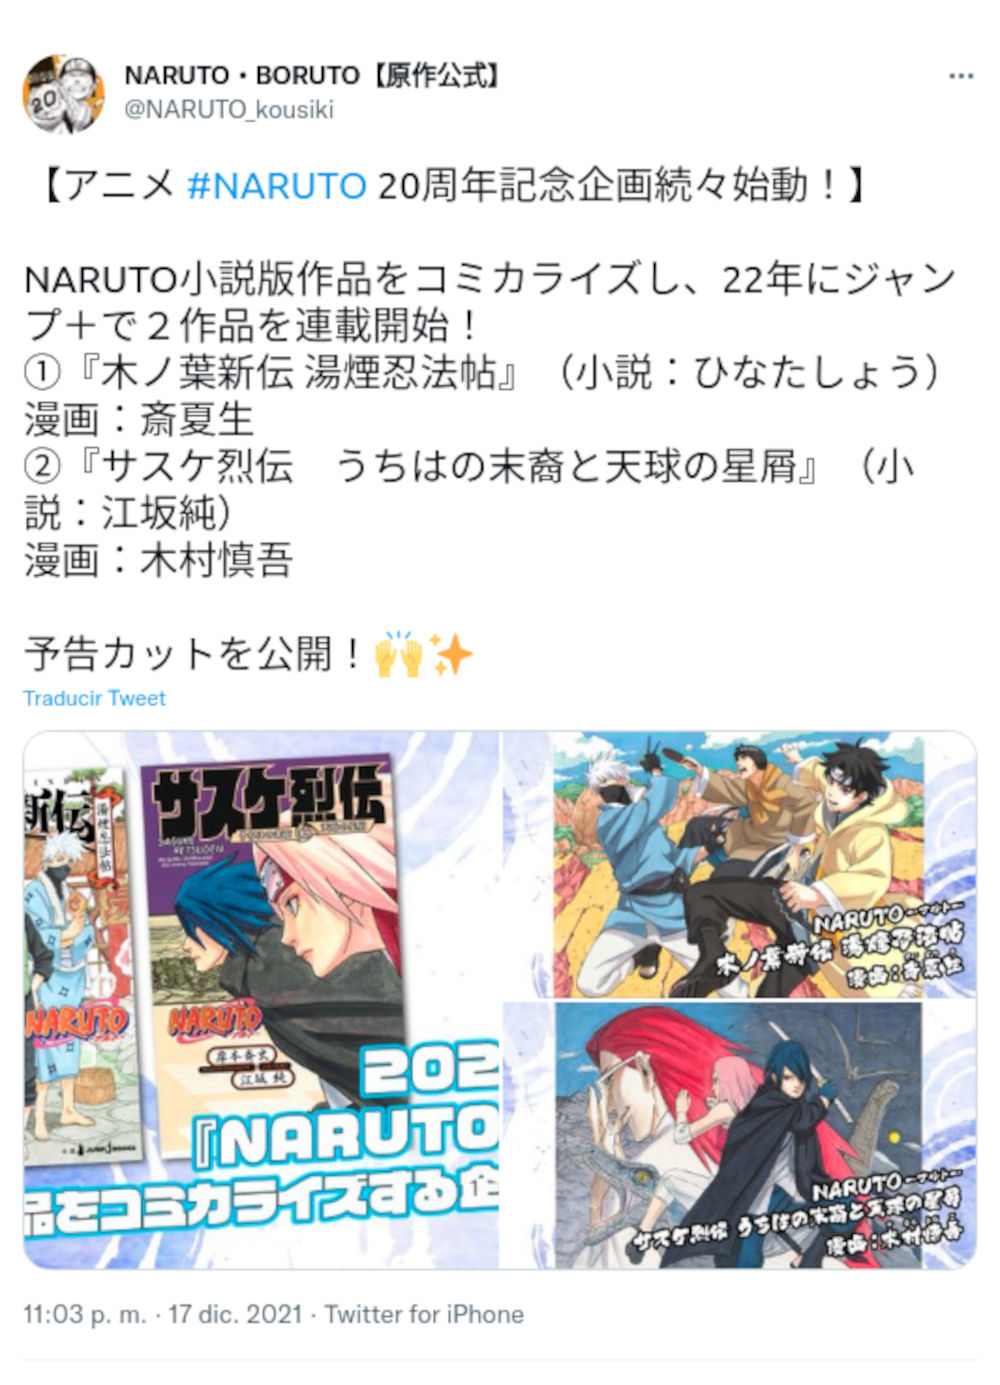 Naruto está de vuelta con un nuevo manga spin-off